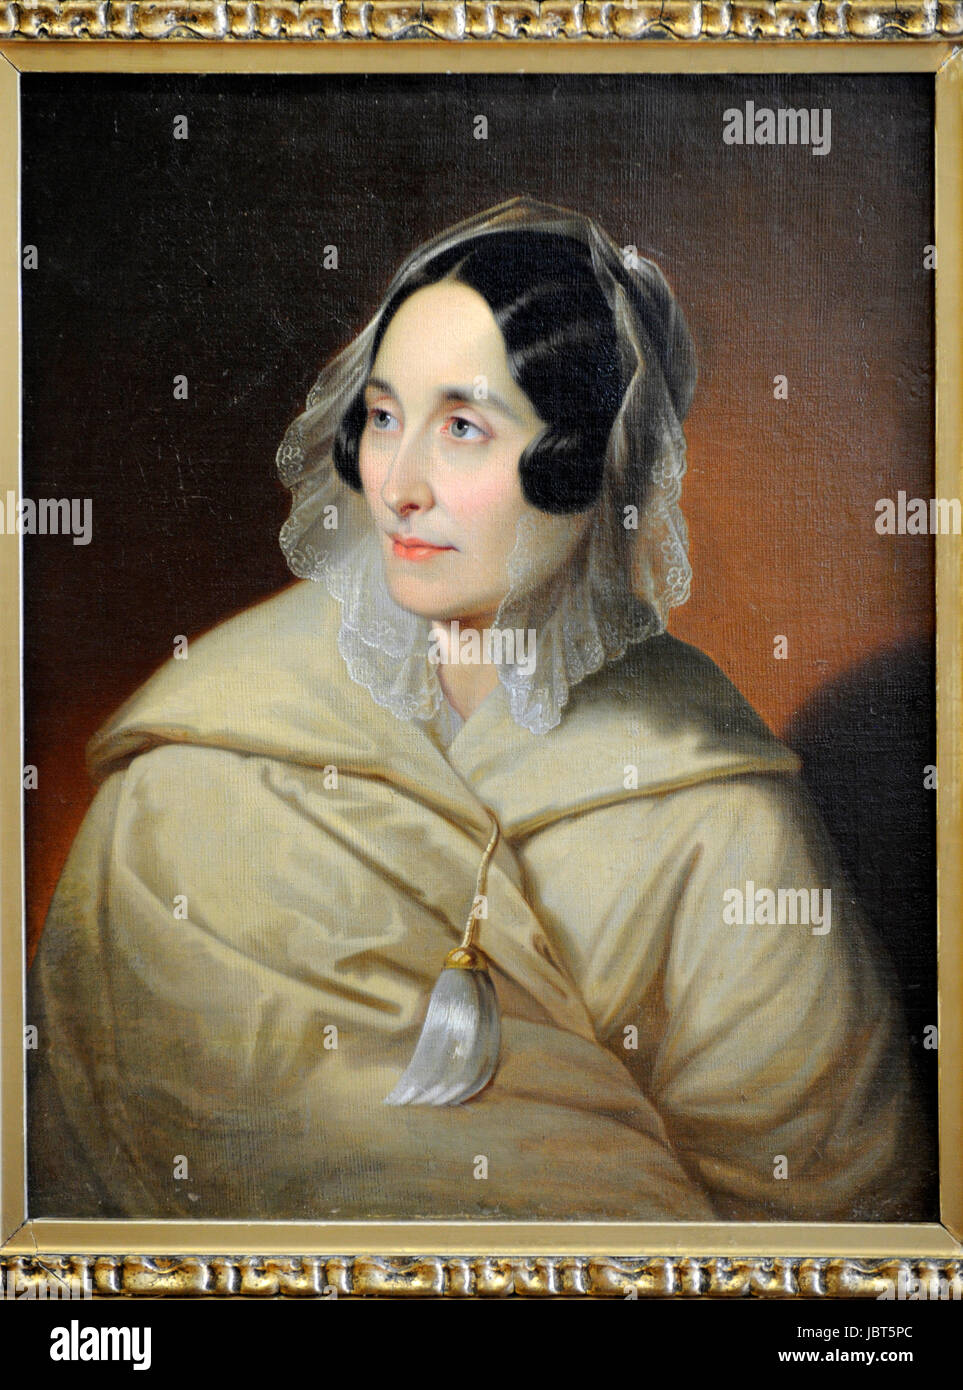 Jan Moraczynski (1807-1870). The Woman in a White Cloak. Vilnius Picture Gallery. Lithuania. Stock Photo